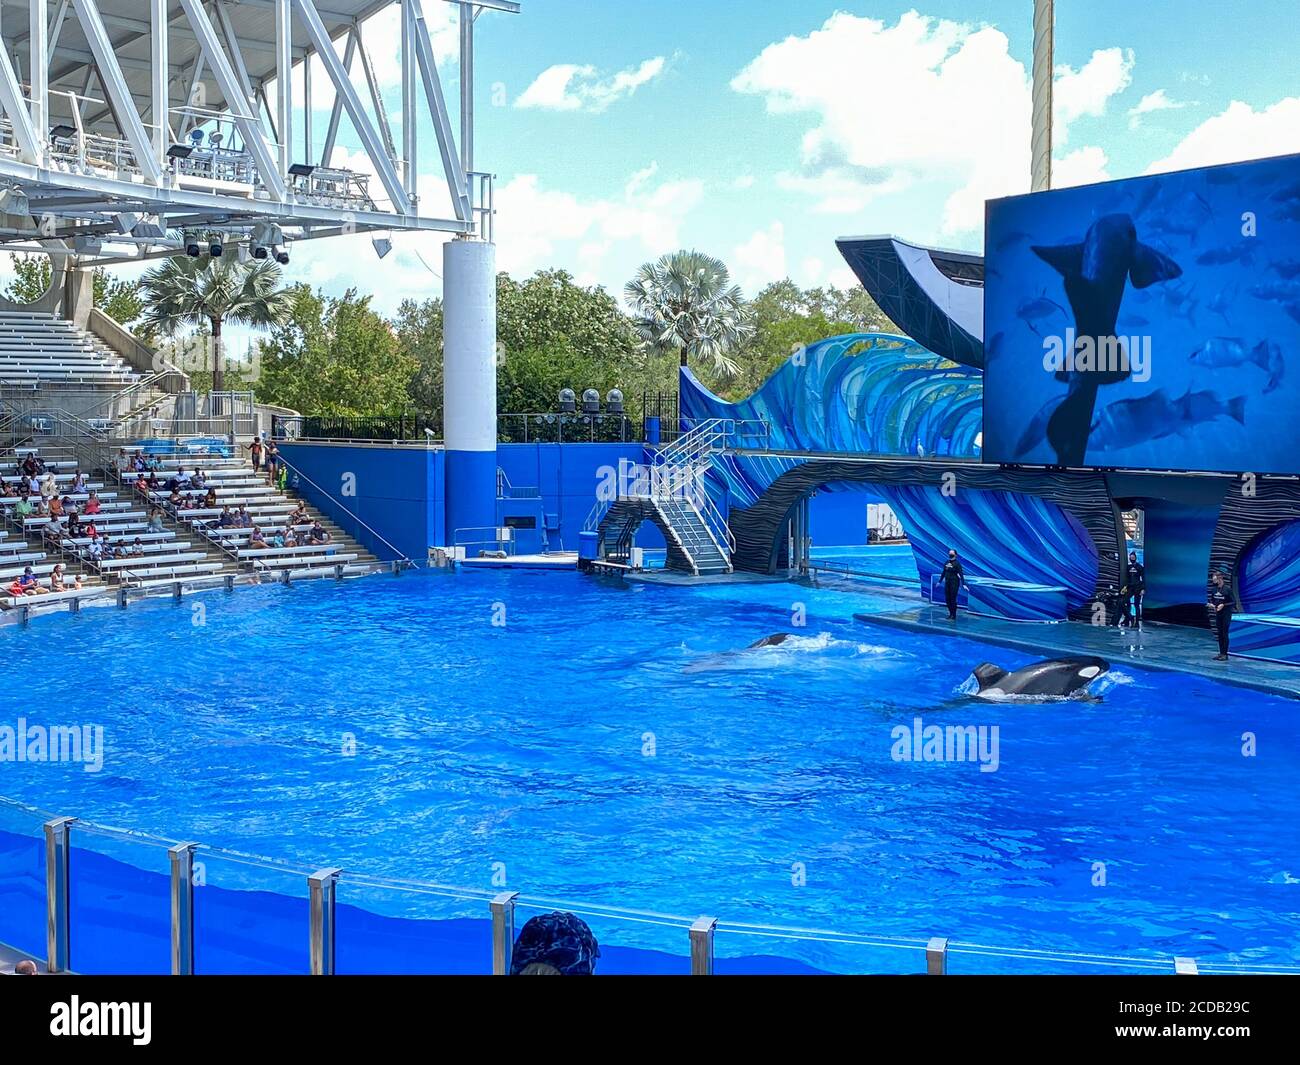 Orlando, FL/USA-7/12/20: The Orca or Killer Whale Exhibit at Seaworld ...